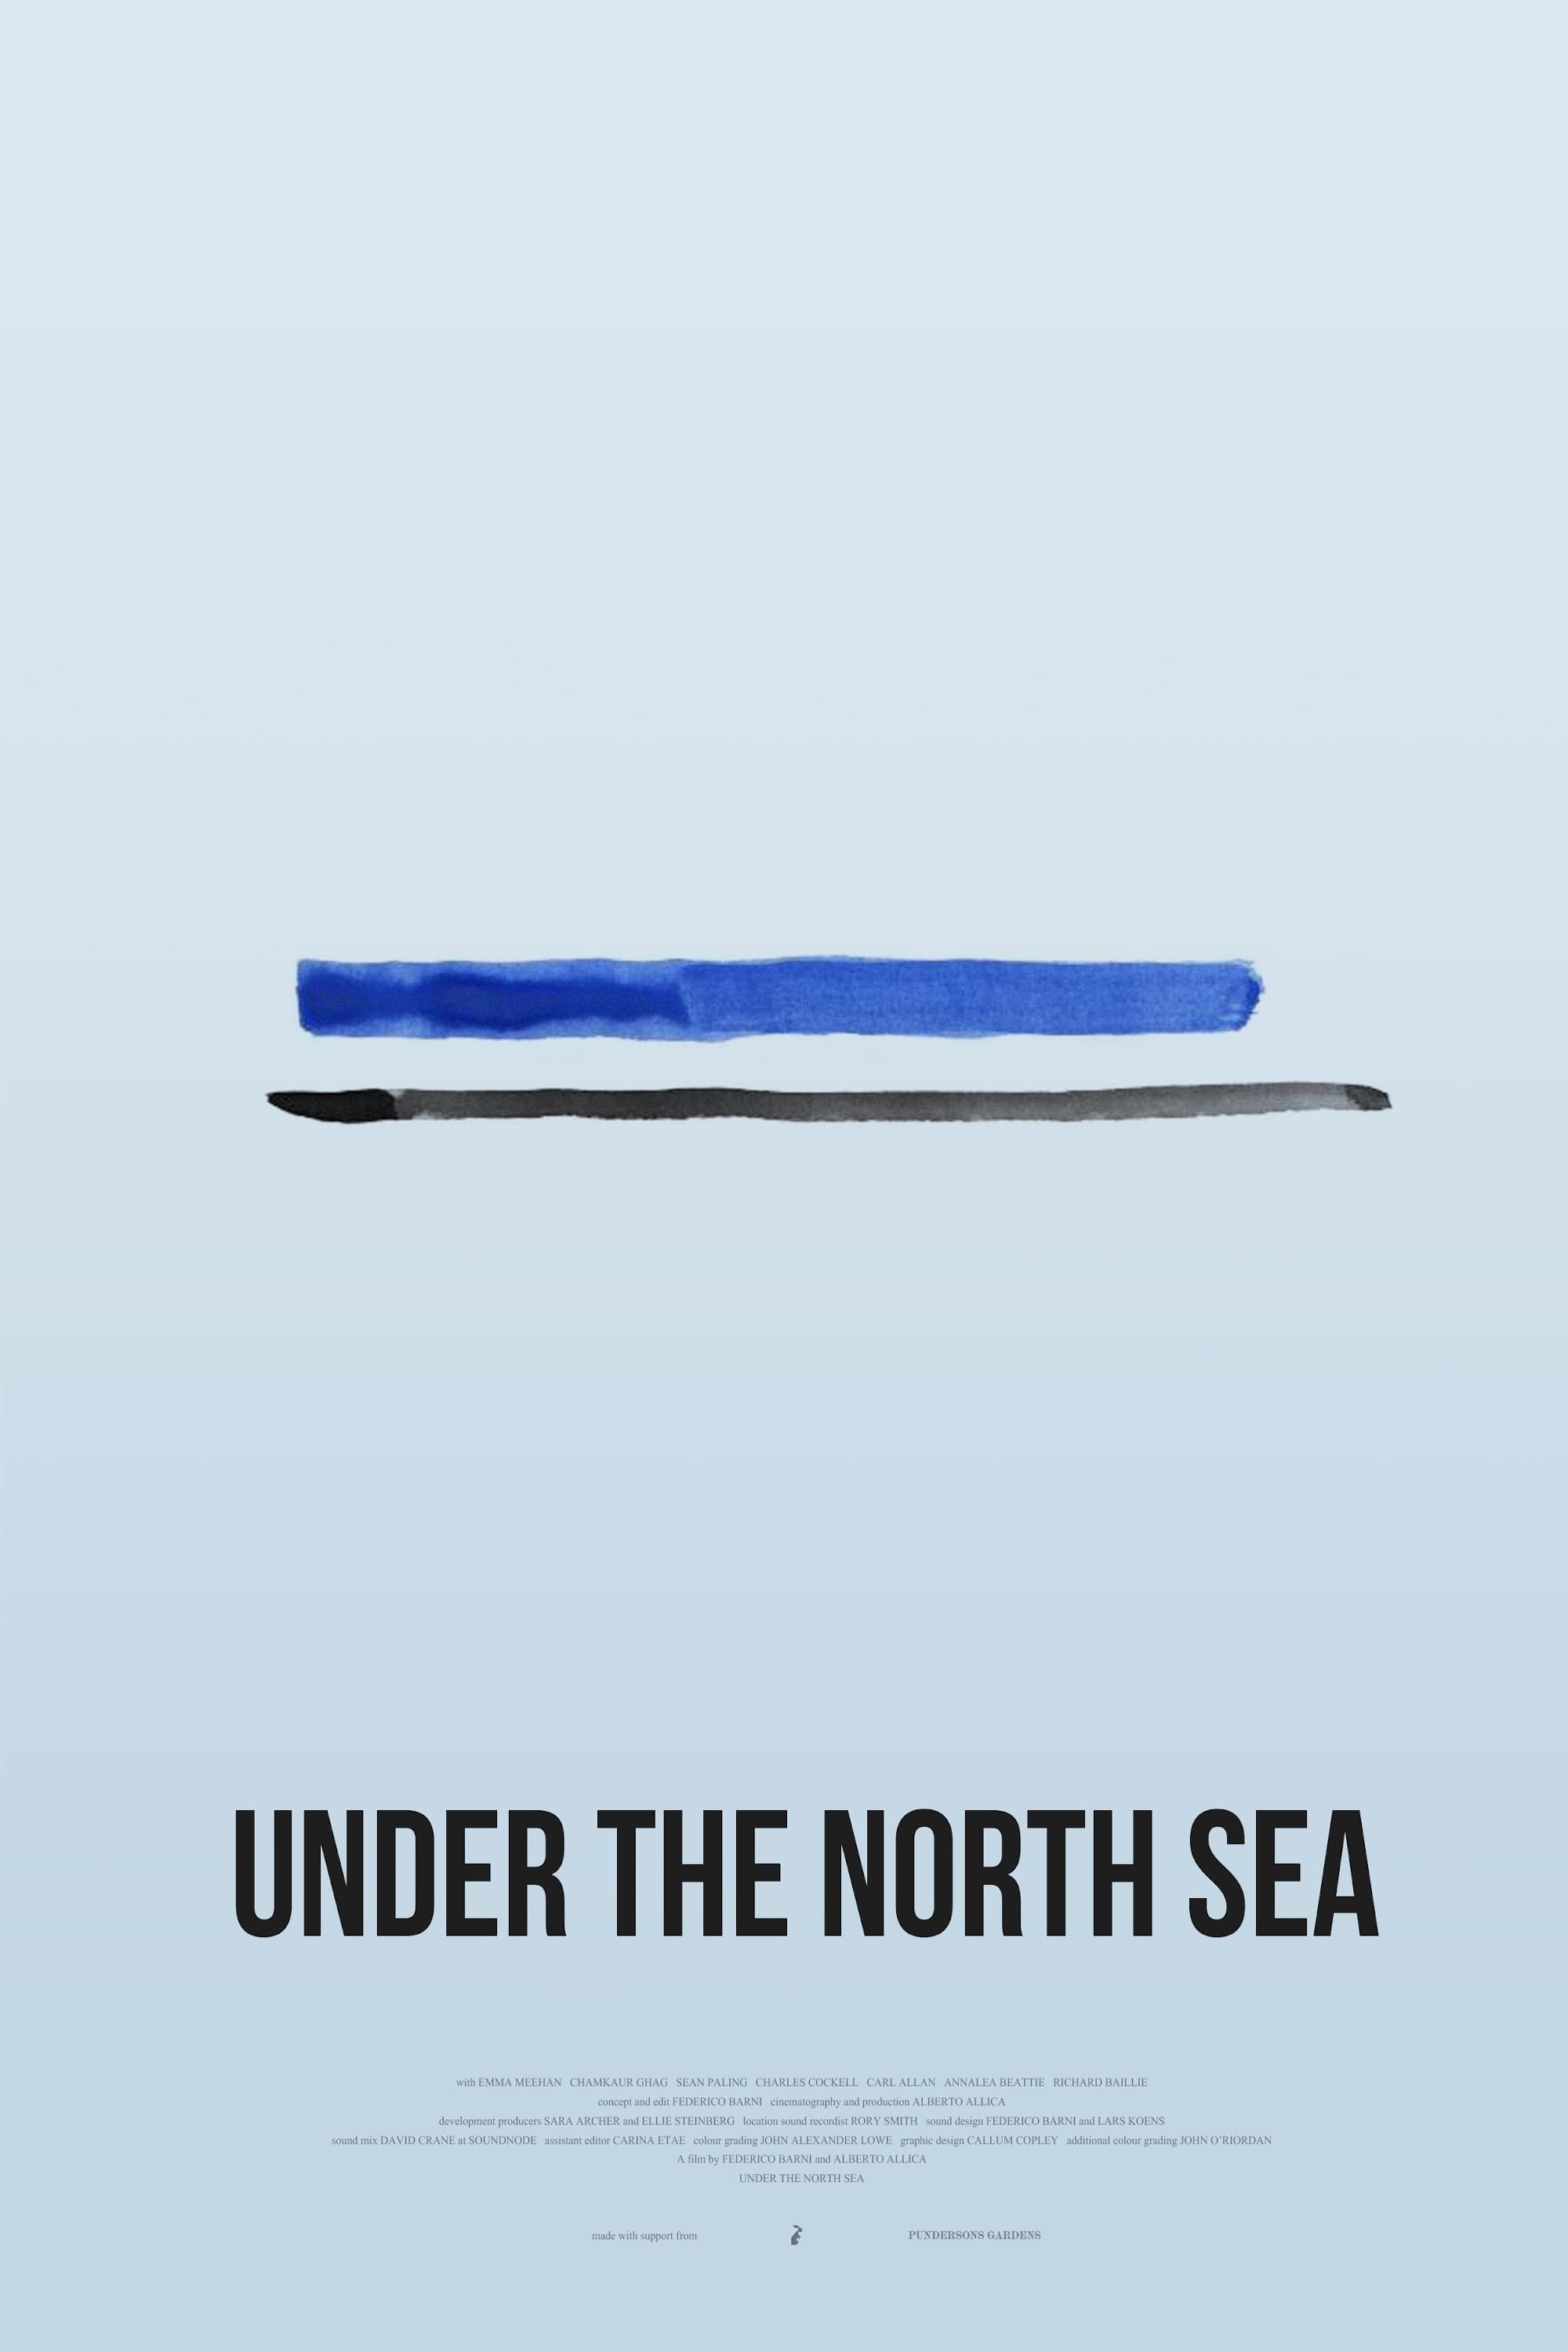 Under the North Sea